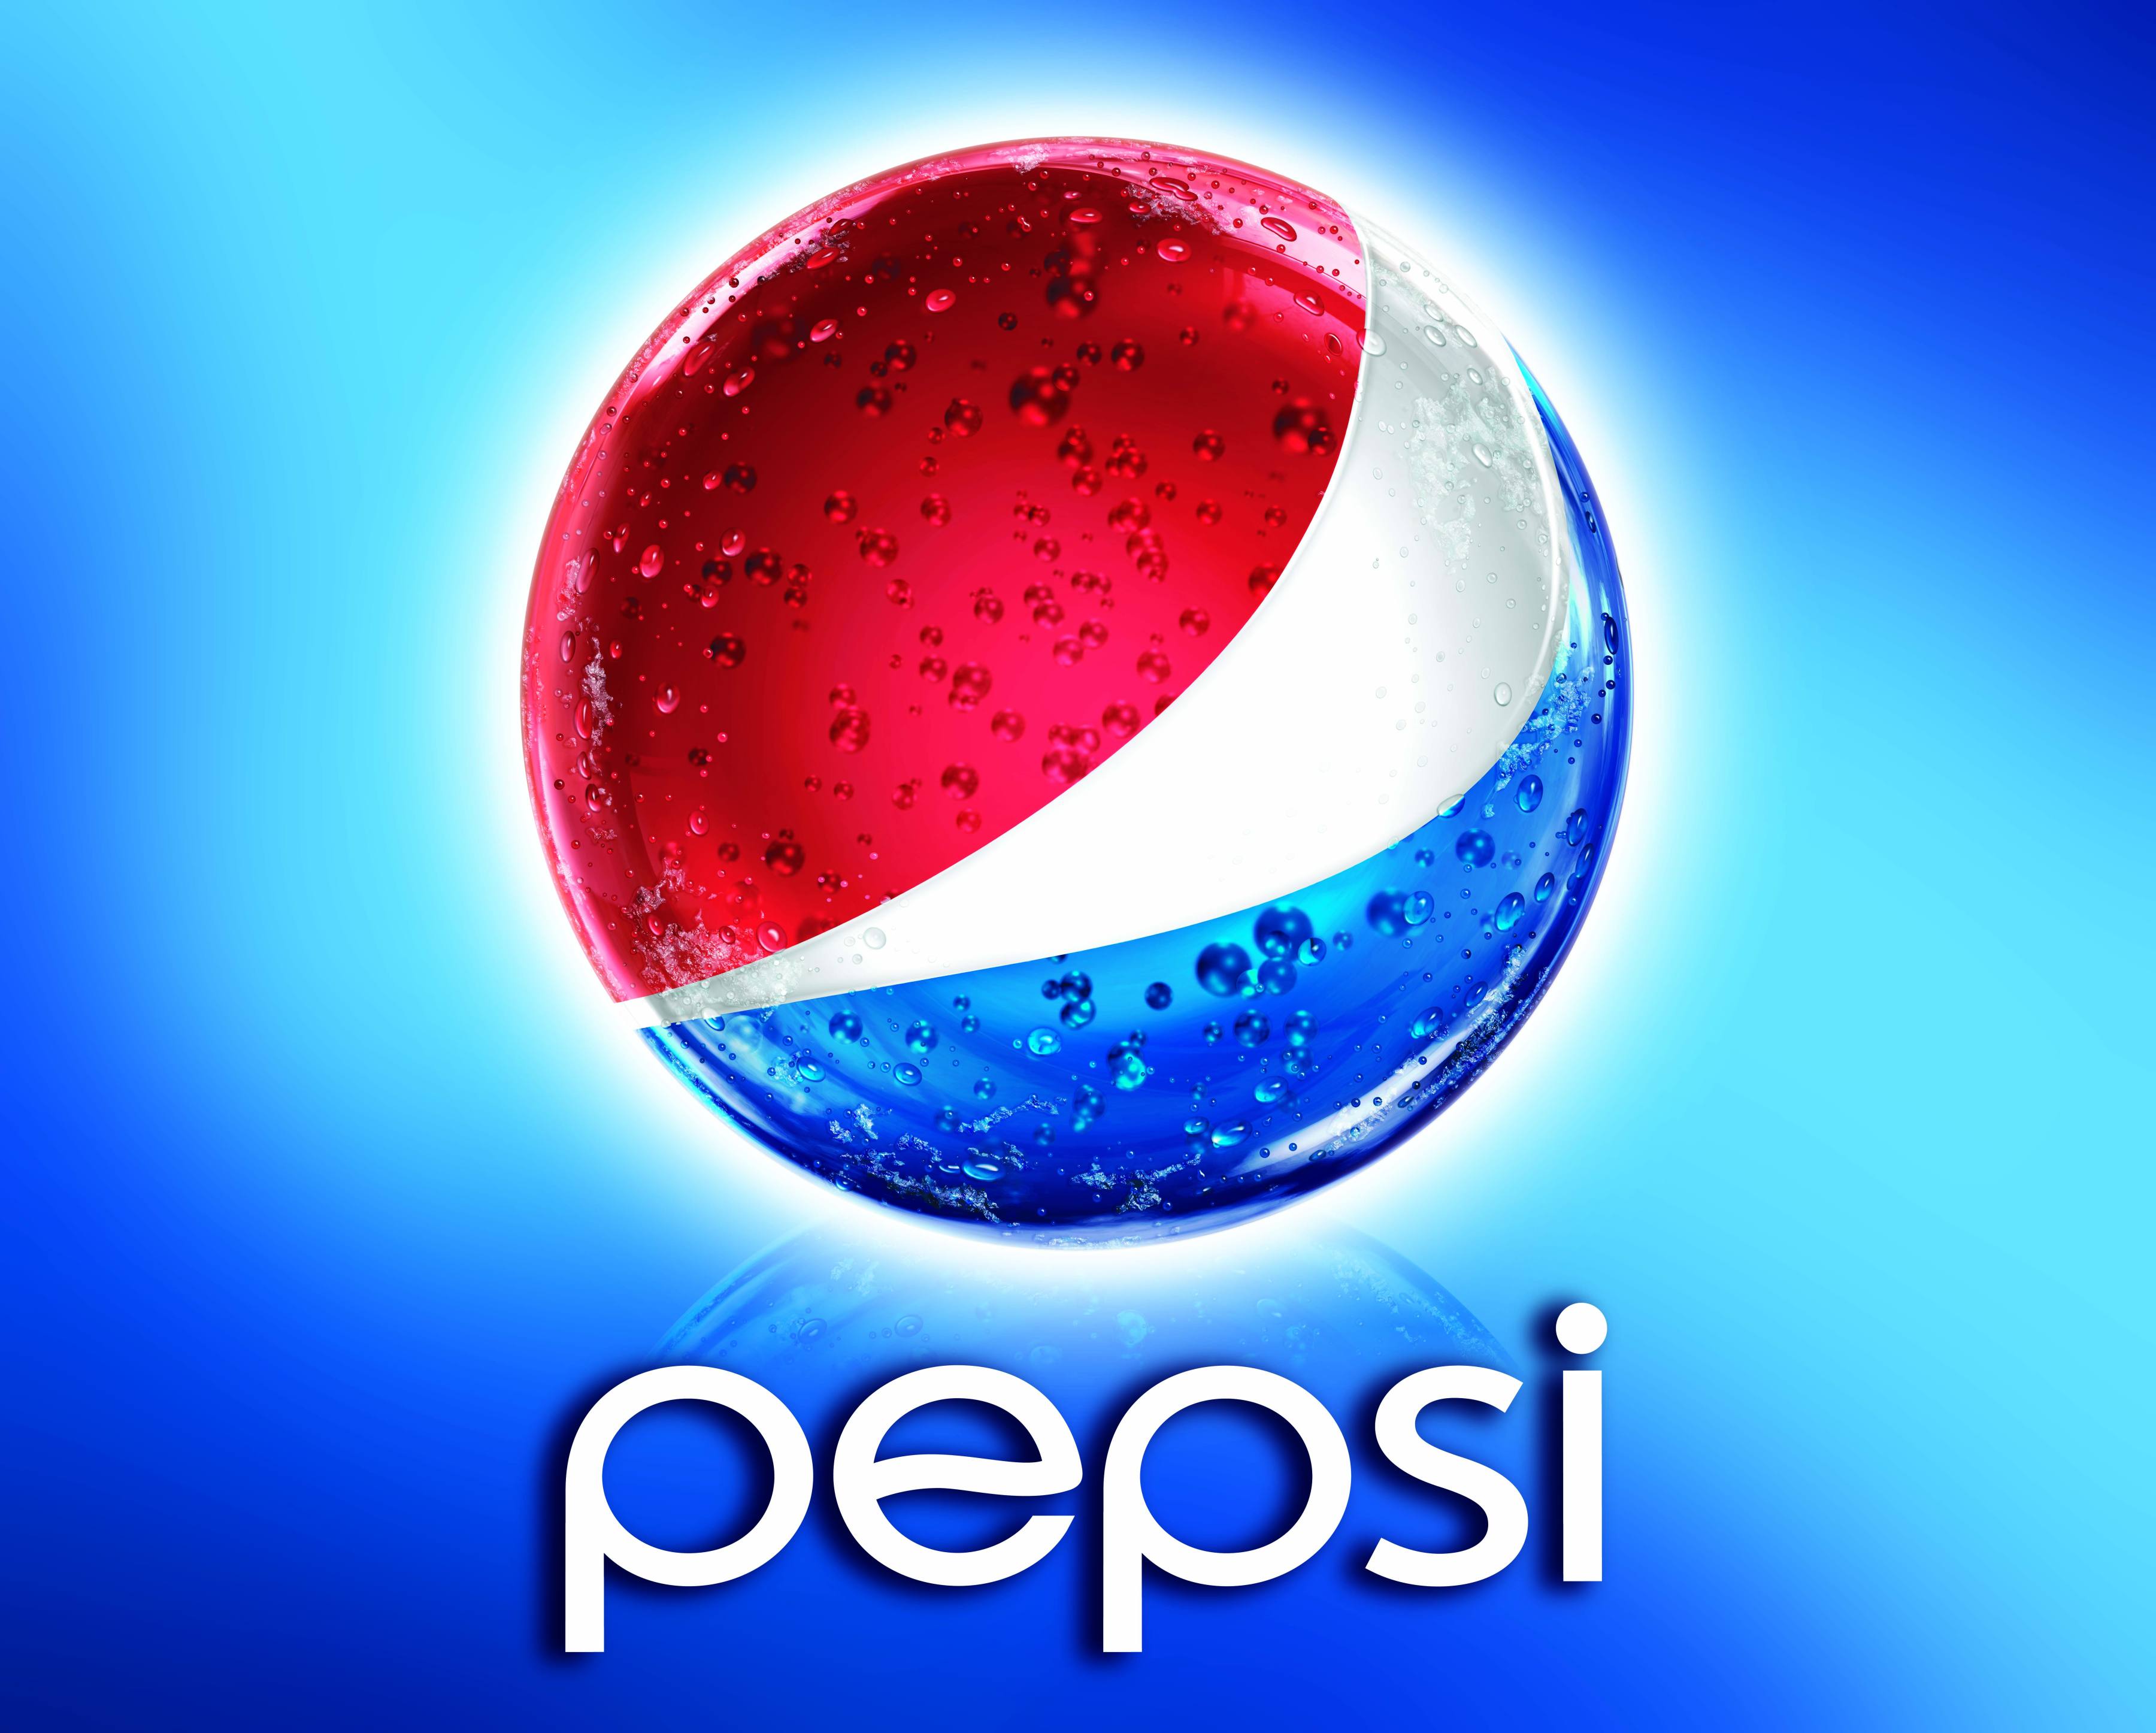 Pepsi Logo wallpaper 2018 in Brands & Logos